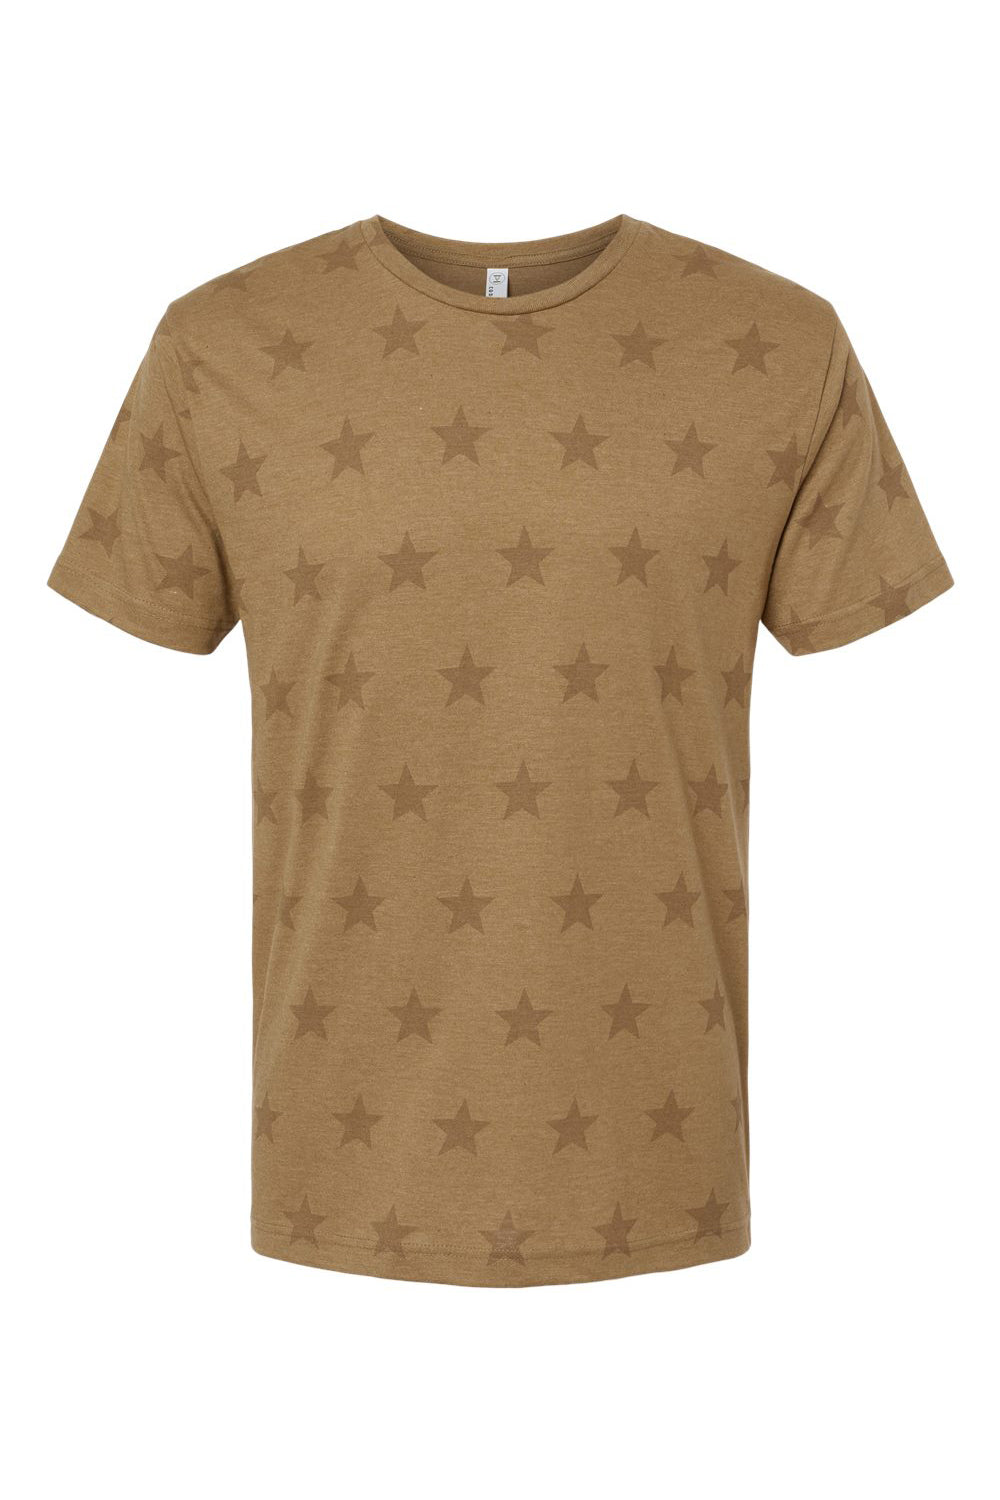 Code Five 3929 Mens Star Print Short Sleeve Crewneck T-Shirt Coyote Brown Flat Front